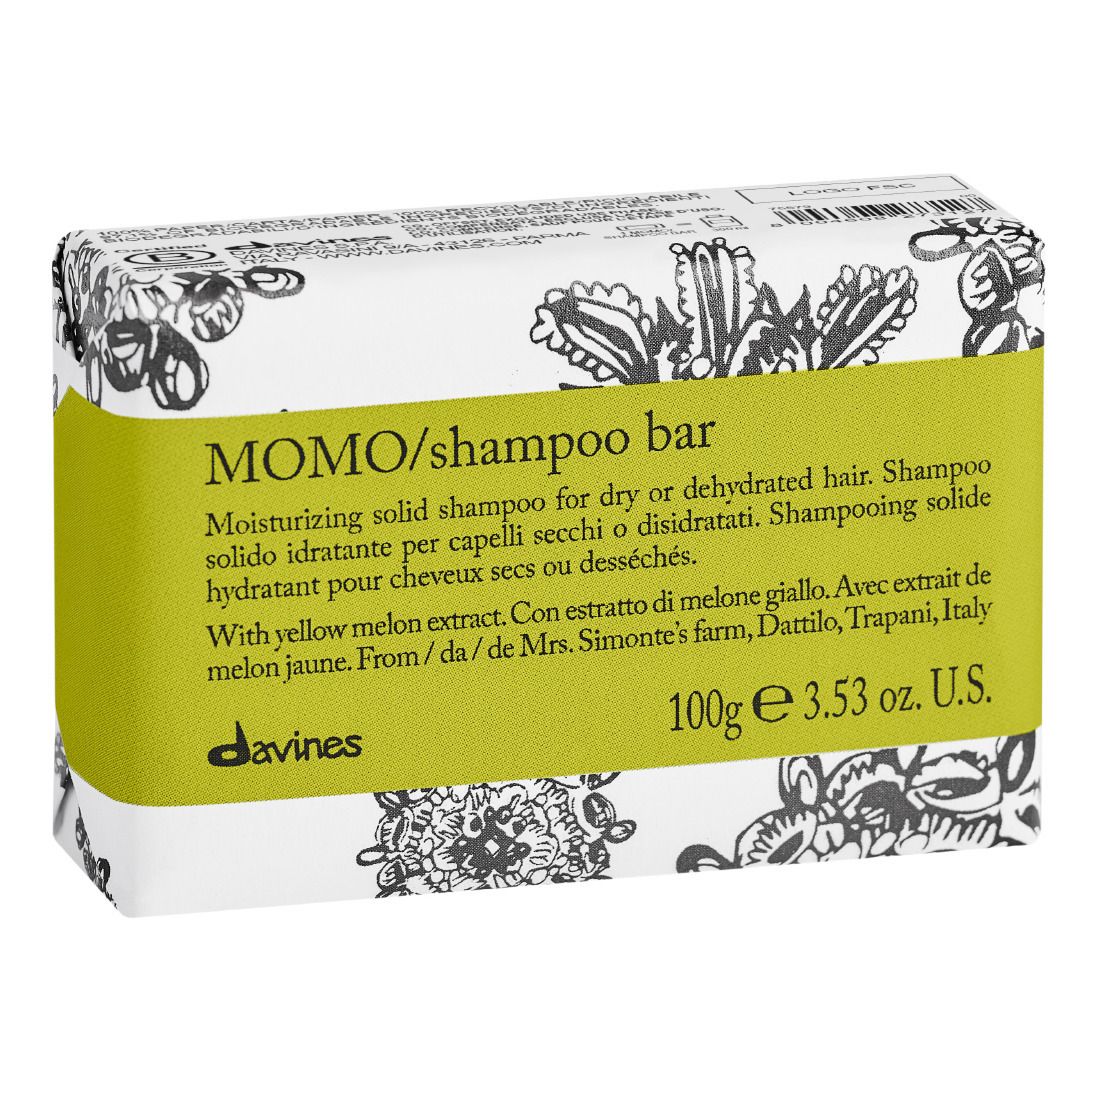 Davines - Shampoing solide hydratants pour cheveux secs Momo -100g - Blanc